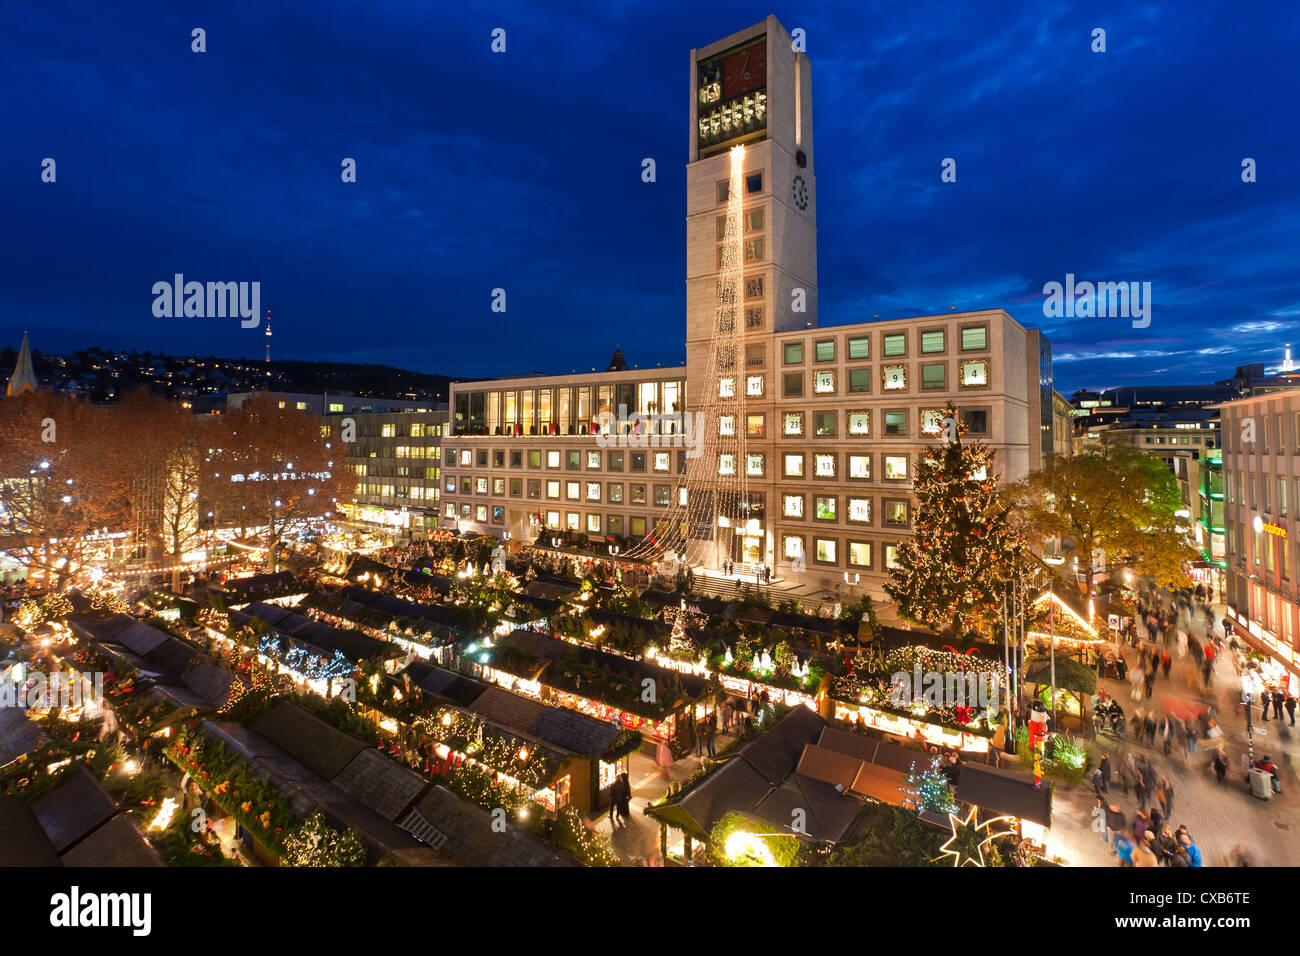 CHRISTMAS MARKET, TOWN HALL, MARKTPLATZ SQUARE, STUTTGART, BADEN-WUERTTEMBERG, GERMANY Stock Photo